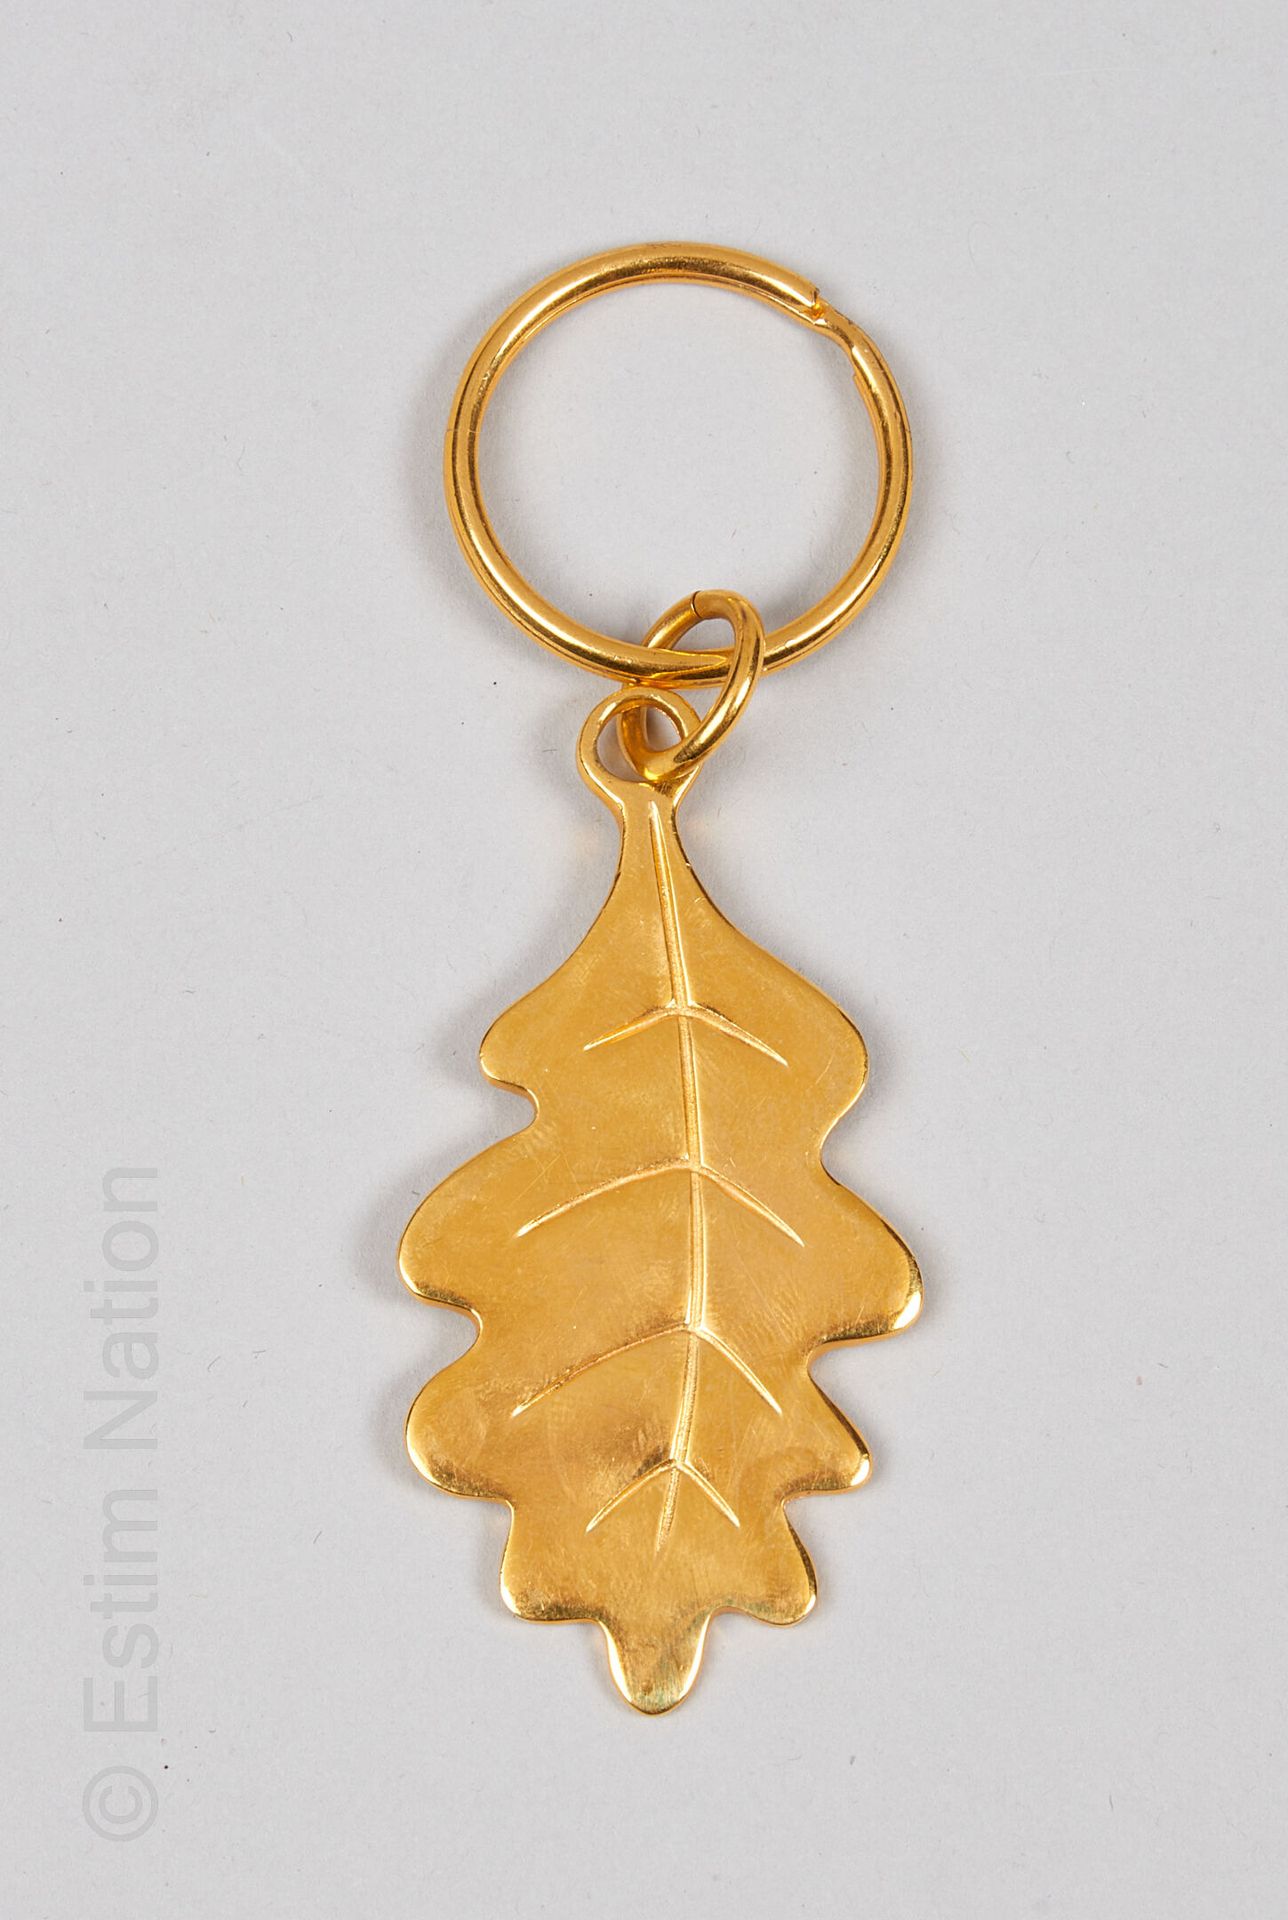 INES DE LA FRESSANGE Golden key ring decorated with an oak leaf.